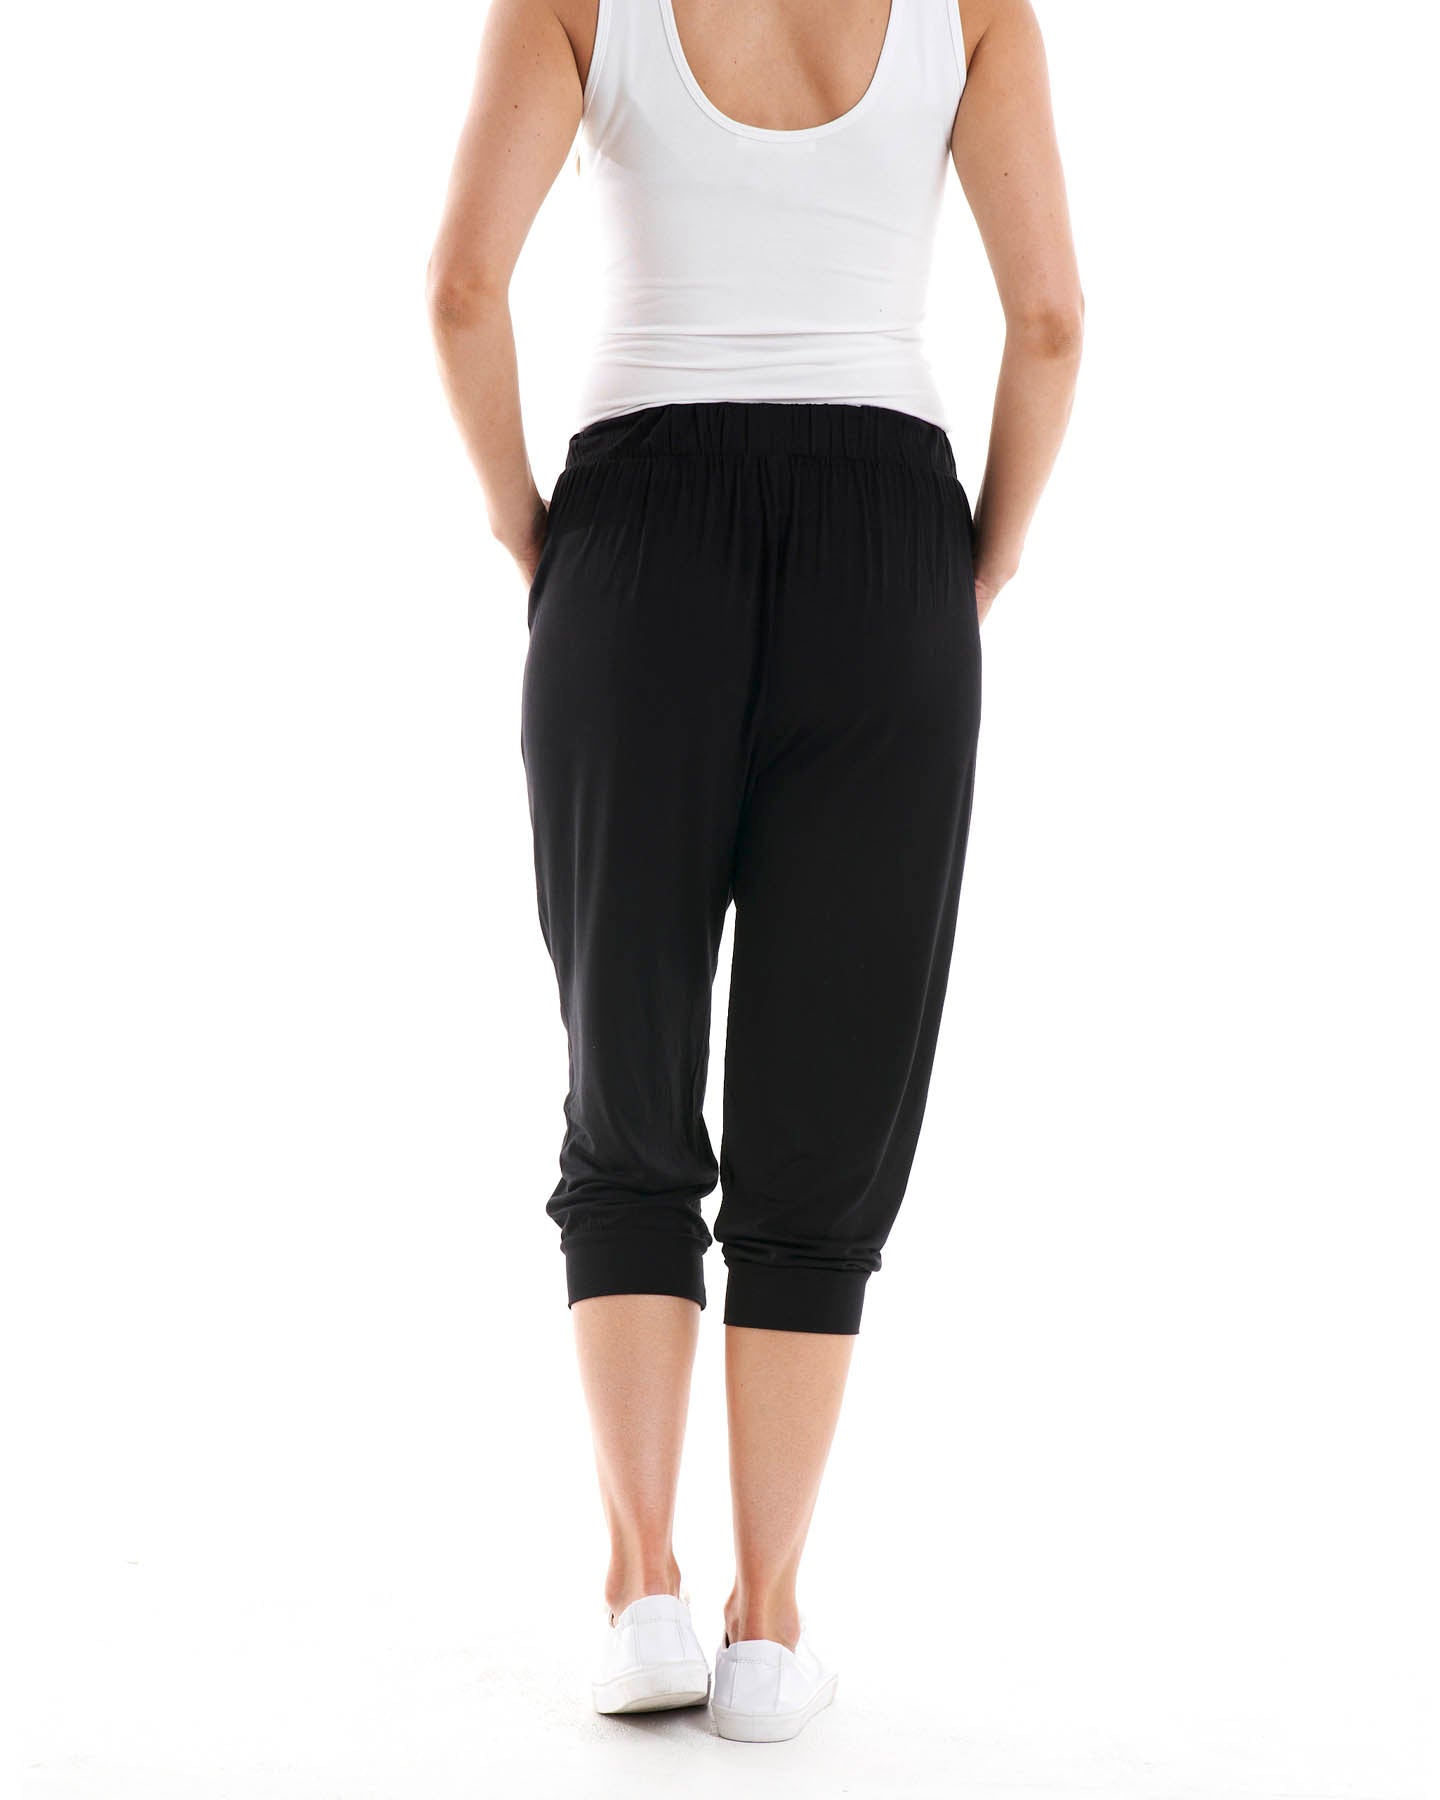 Buy Unimod Knit Capri Pants for Women-Cotton Fabric-Casual Pant-Women Knee  Length 3/4 Quarter Pants-Green-L at Amazon.in